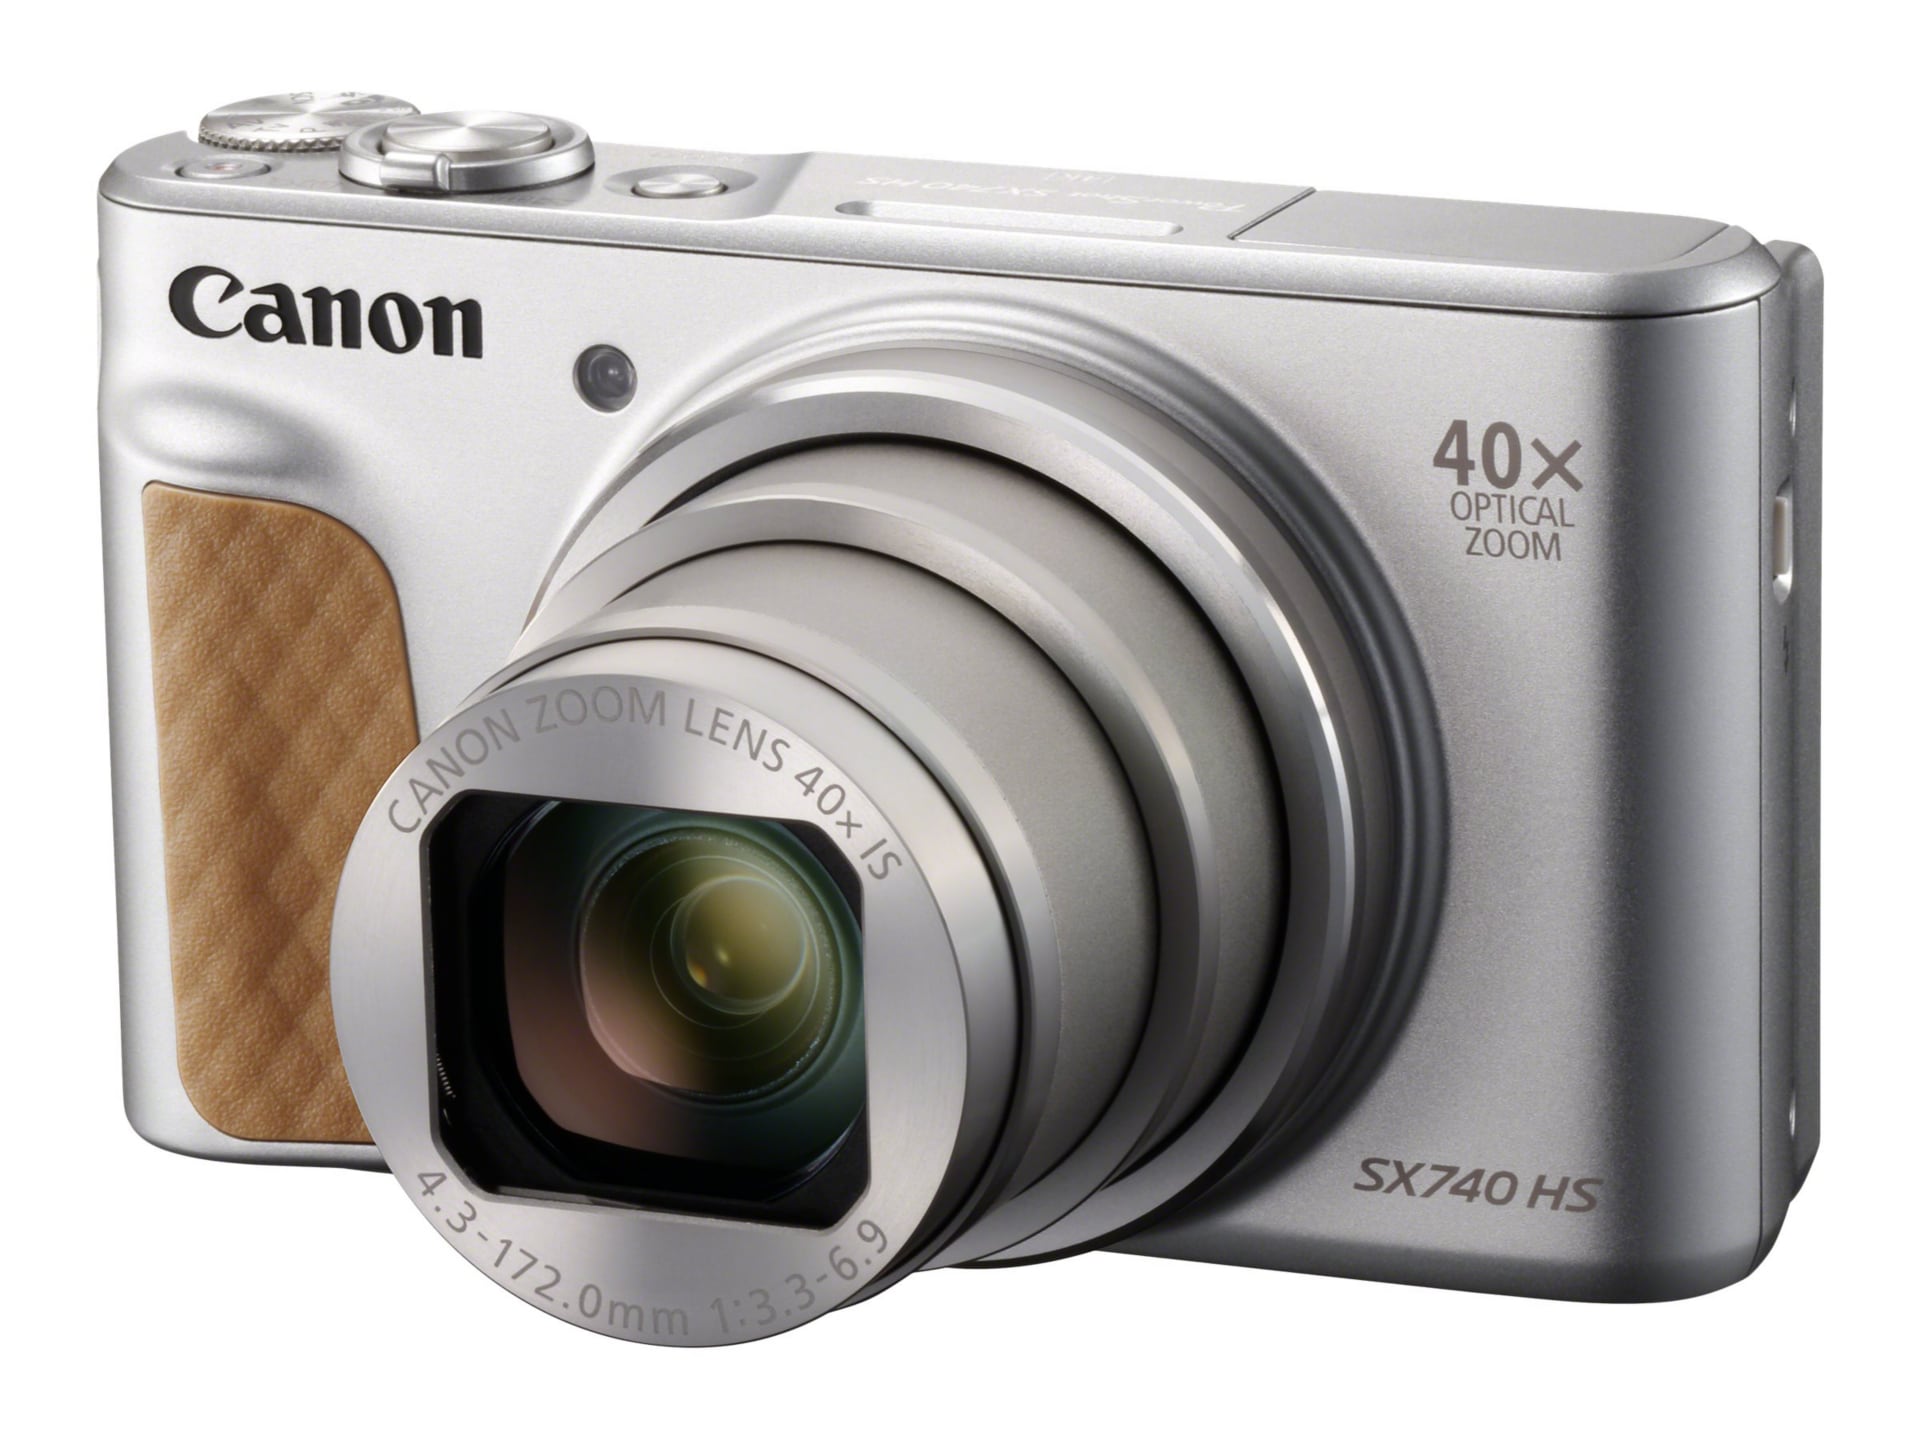 Canon PowerShot SX740 HS - digital camera